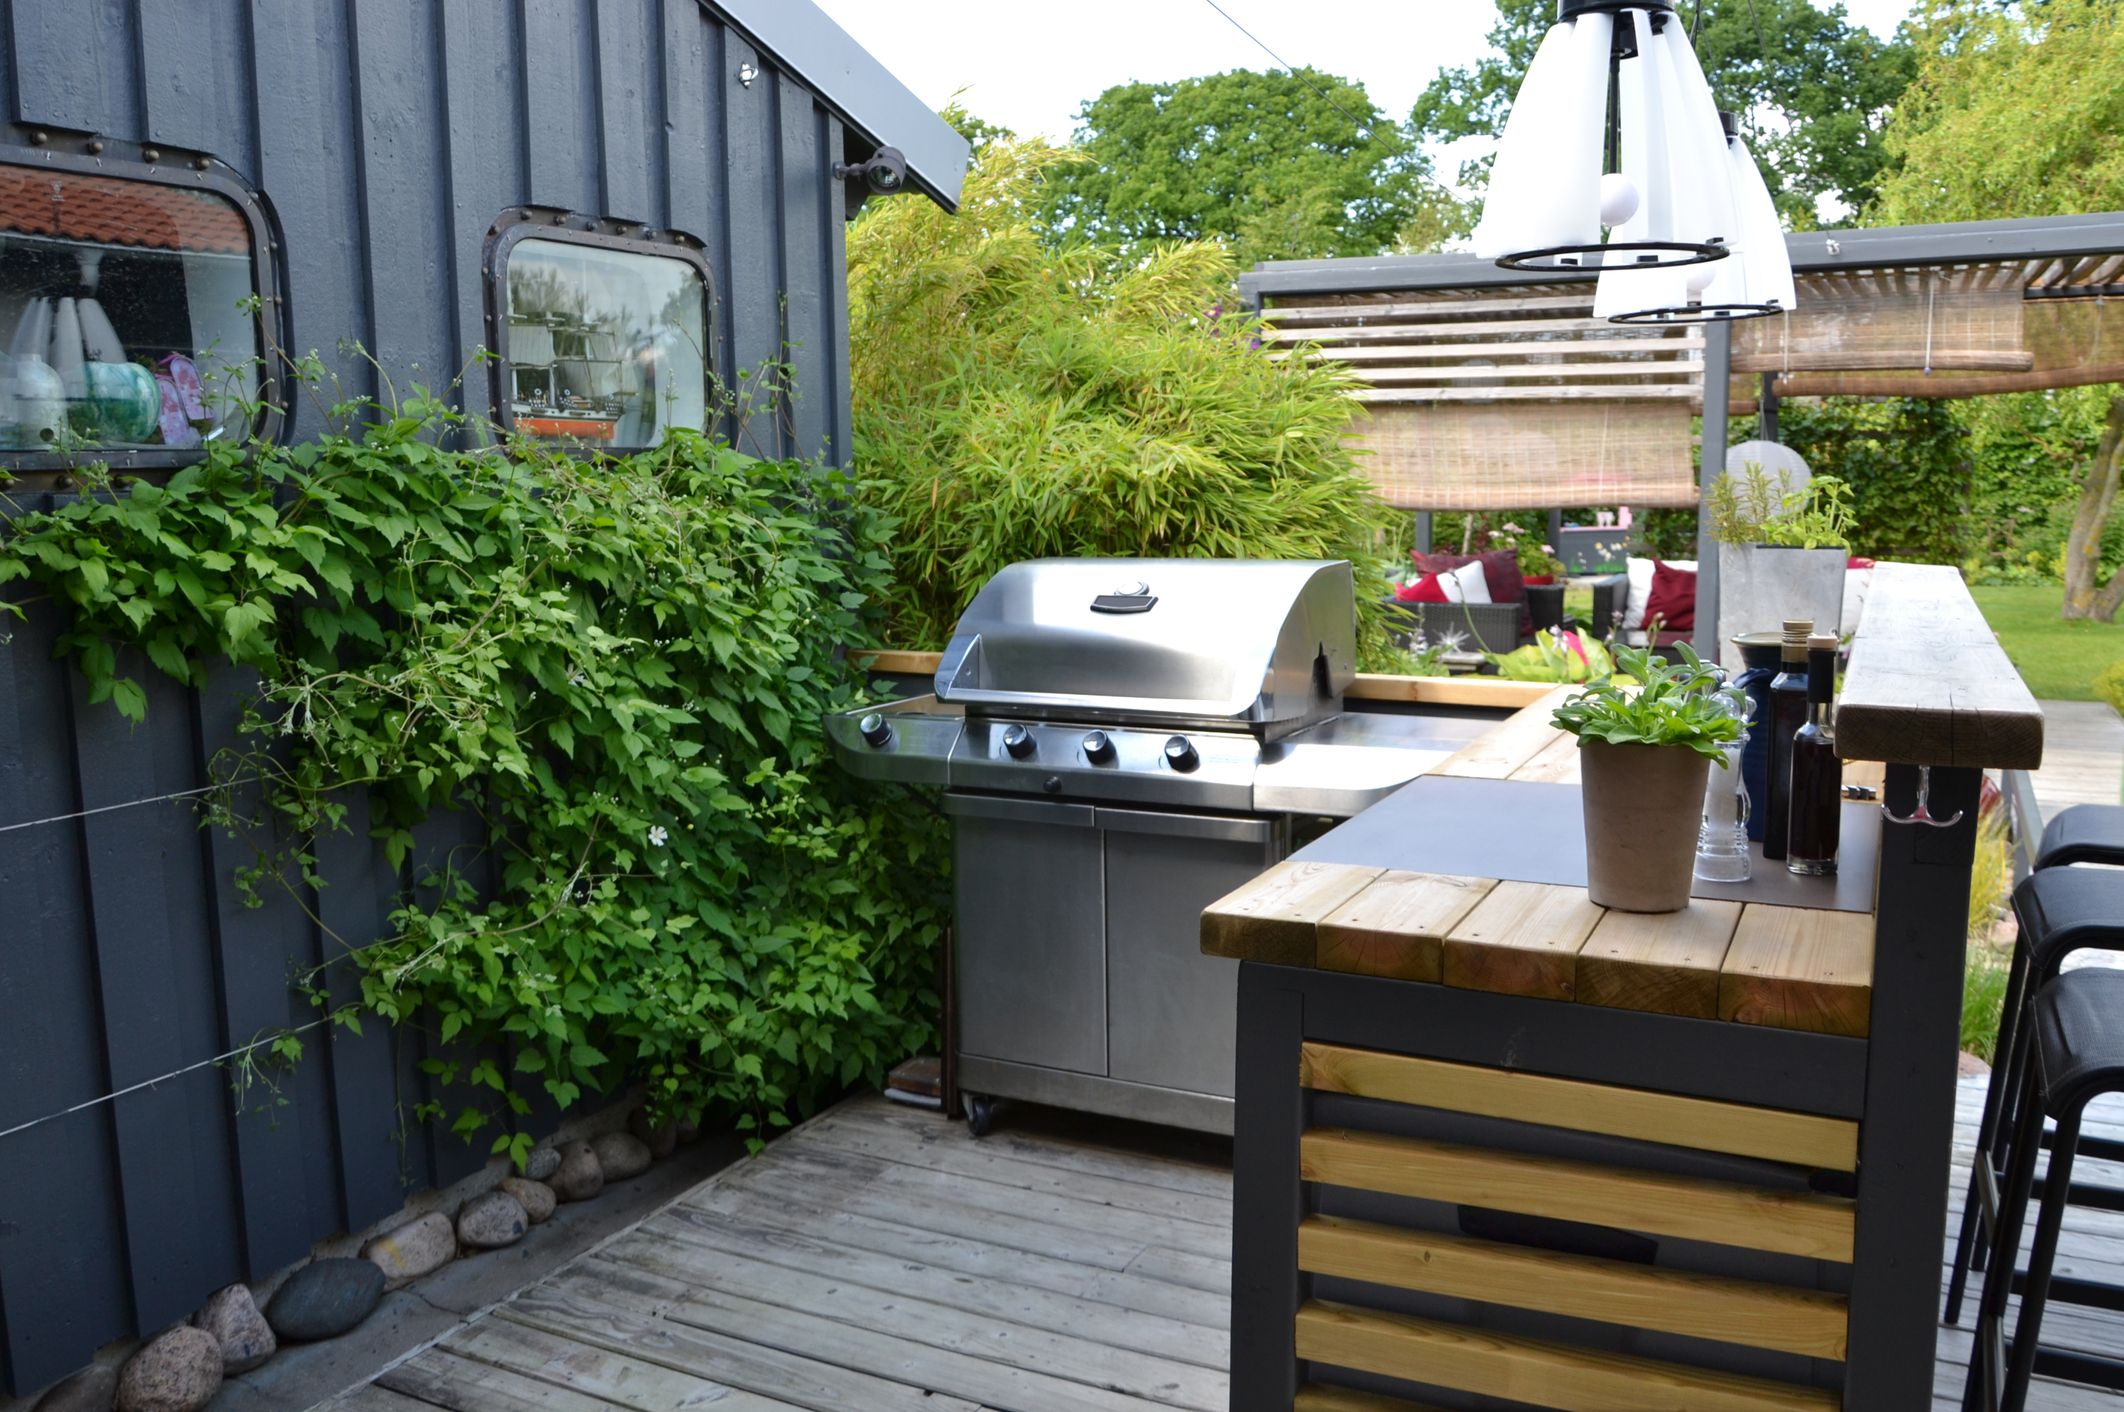 simple outdoor kitchen design ideas